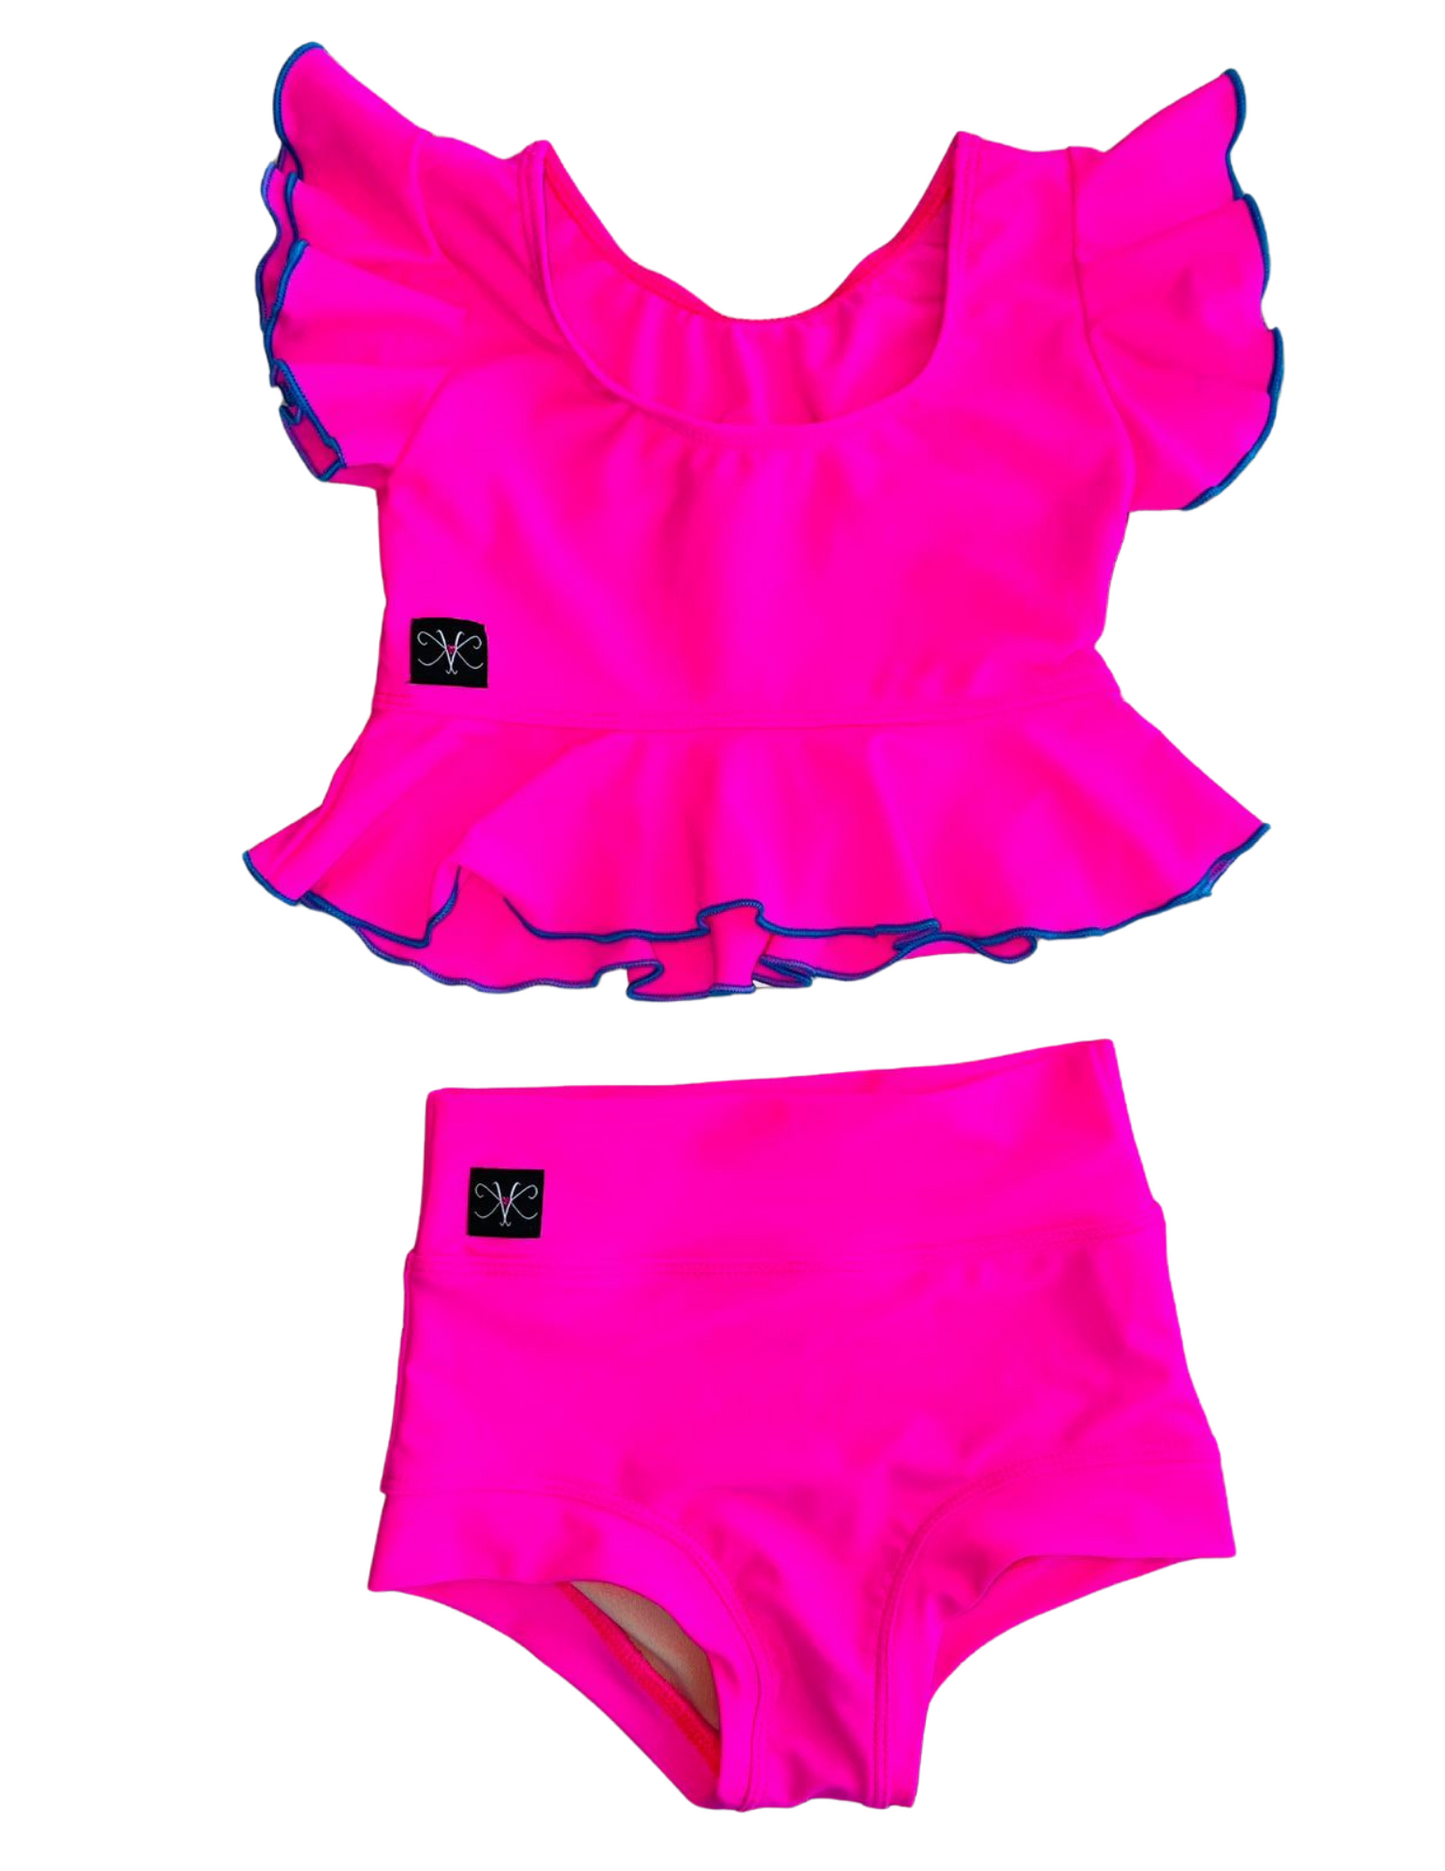 Best Friends Neon Pink Heart on Black Girls Dancewear Crop Top